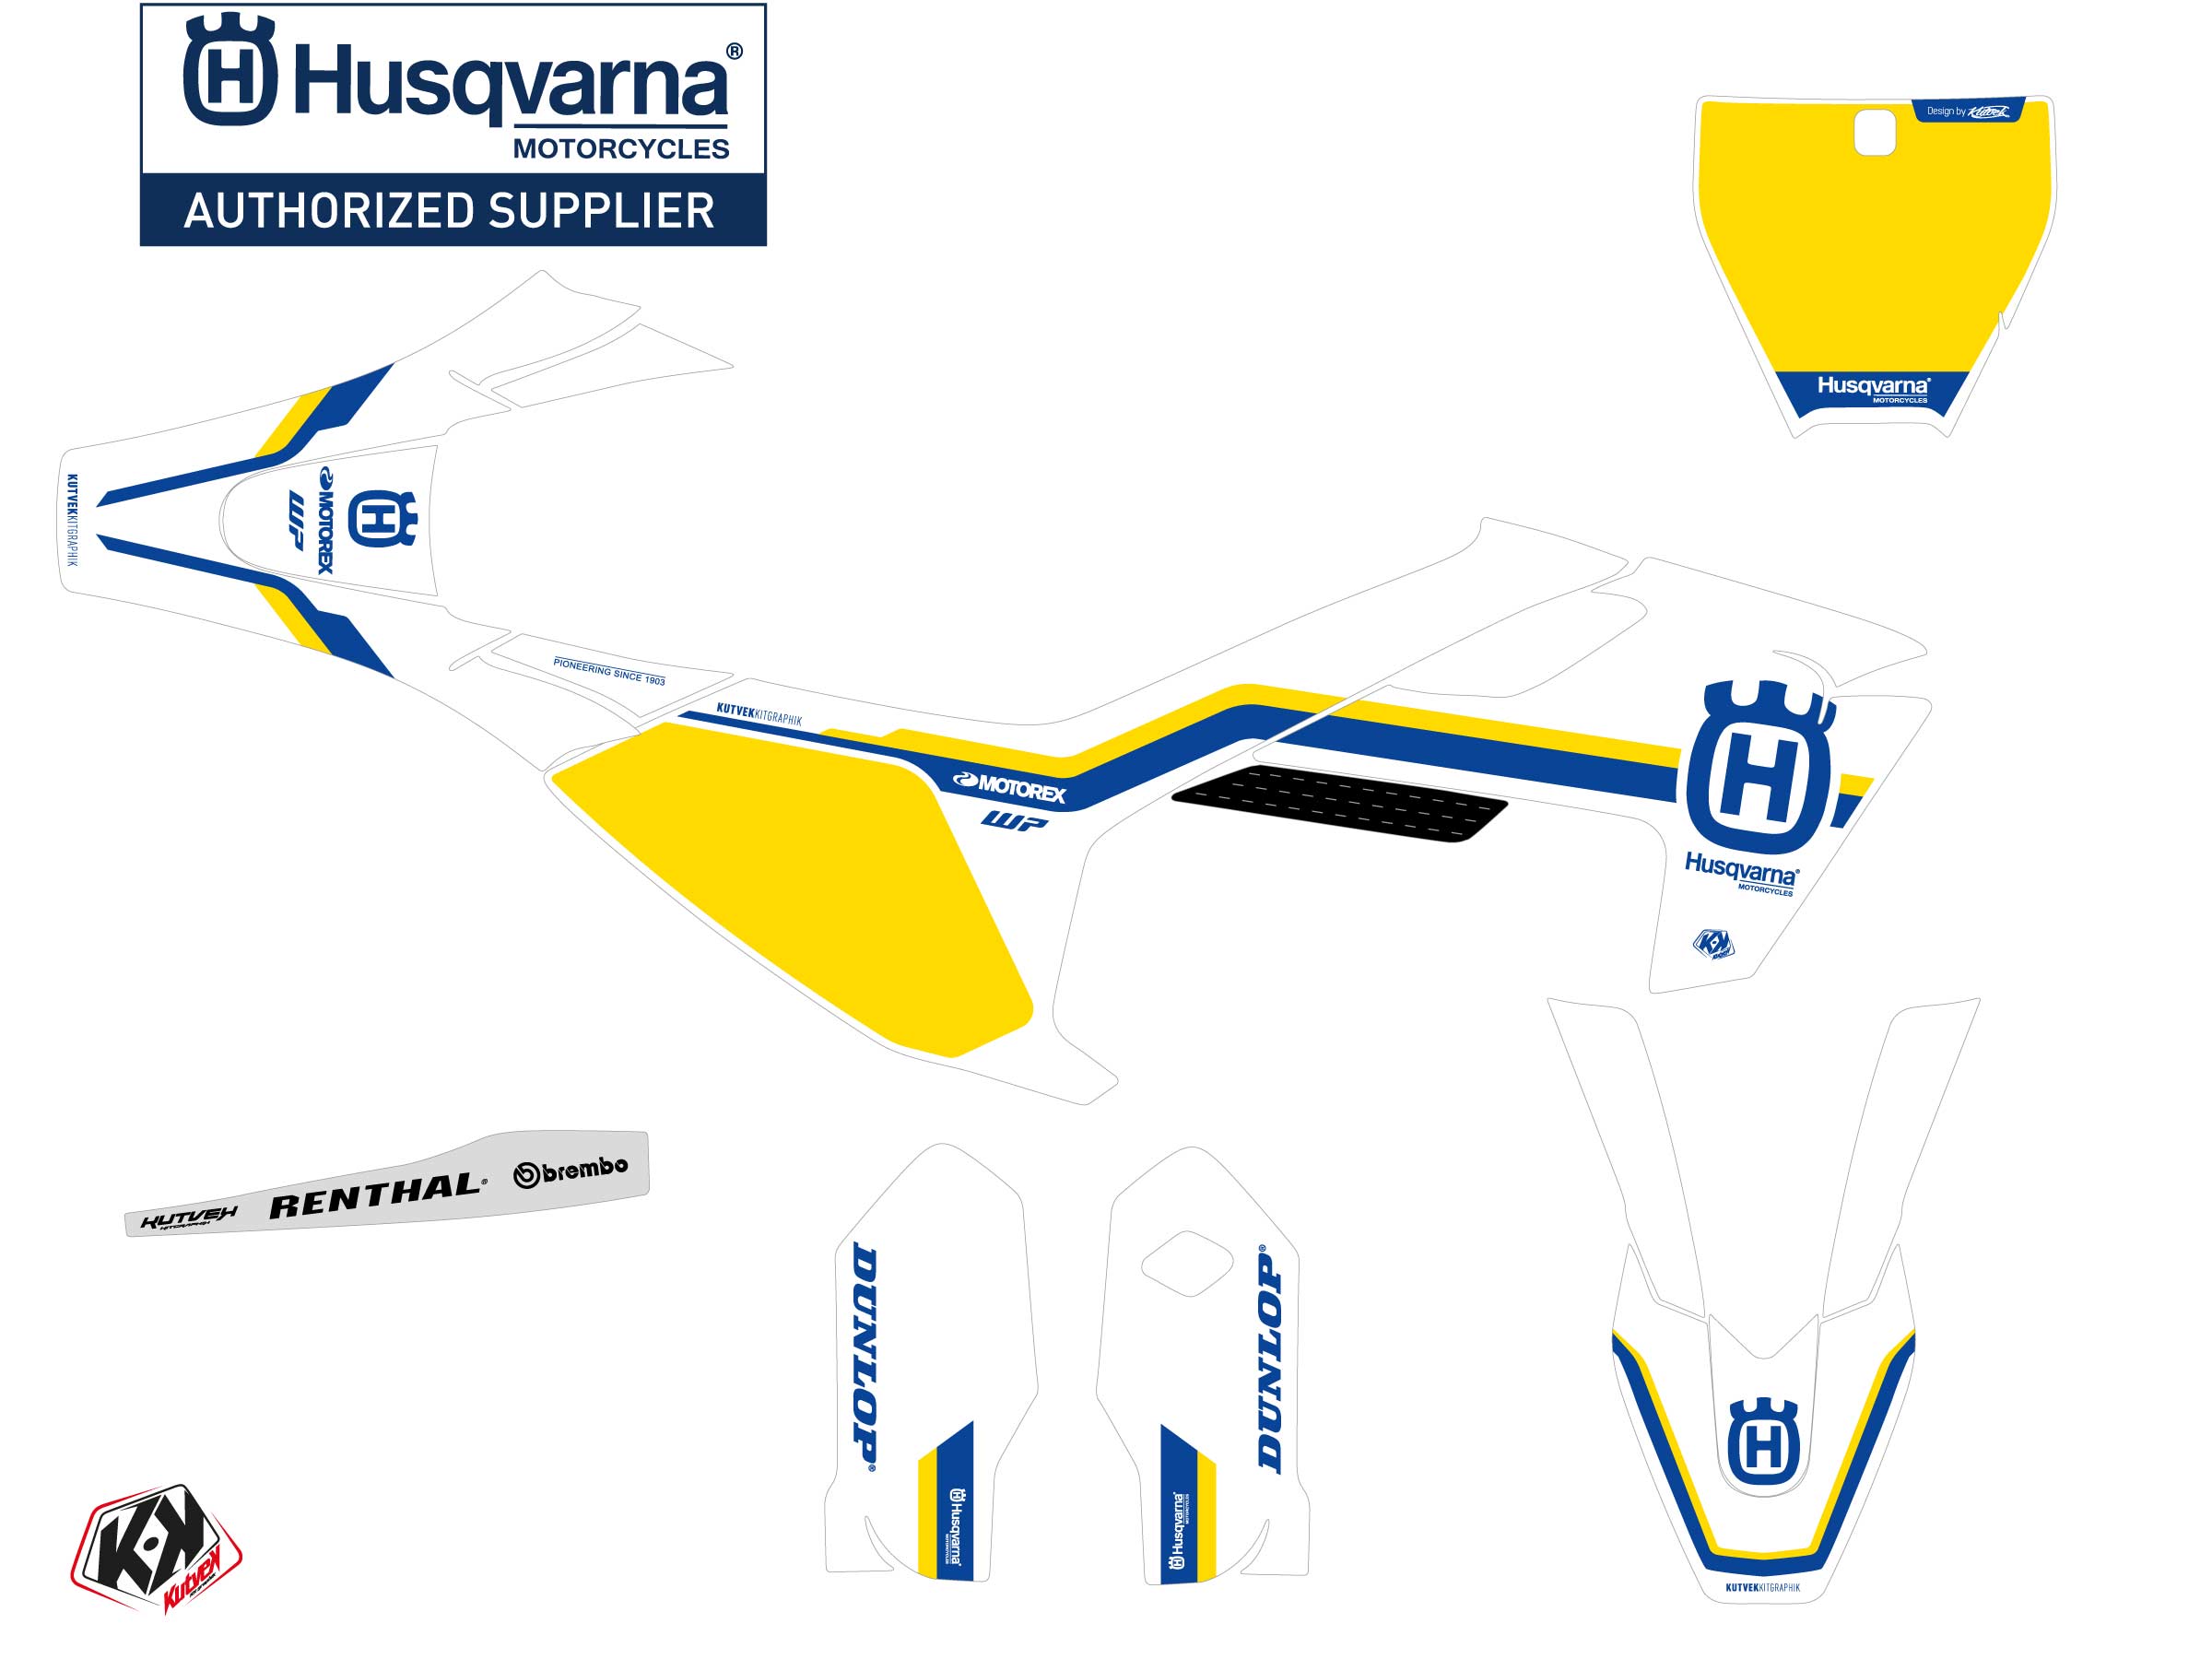 Husqvarna Tc 85 Dirt Bike Heritage K23 Graphic Kit